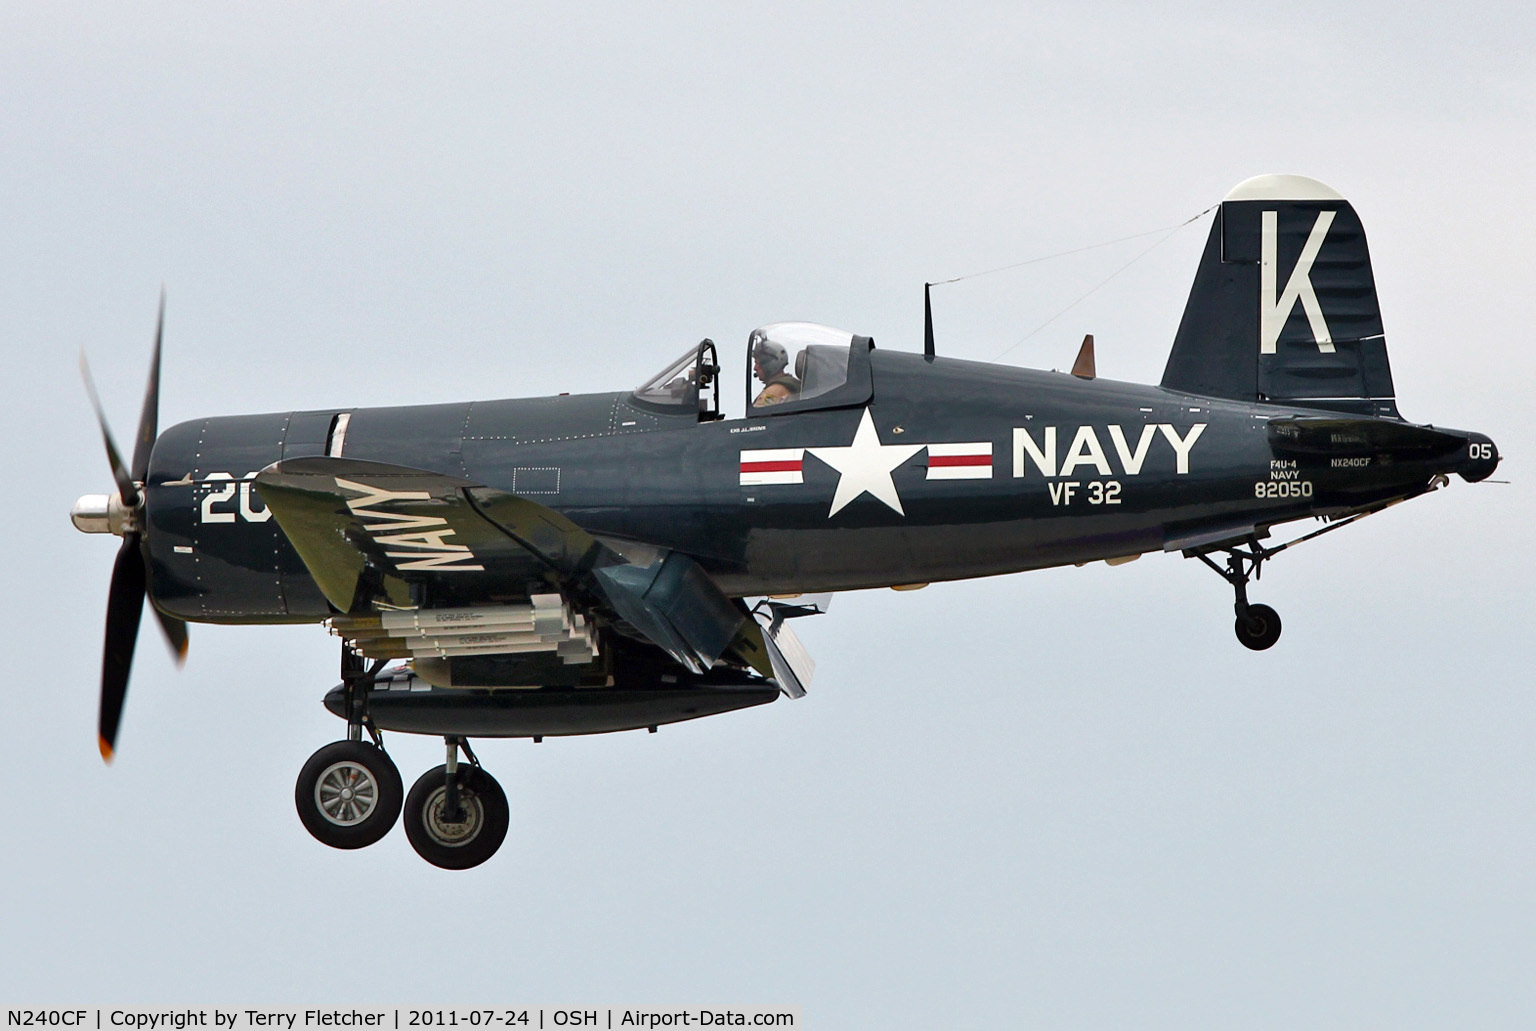 N240CF, 1945 Vought F4U-4 Corsair C/N 9513, 1945 Chance Vought F4U-4, c/n: 9513 ex Bu 97359    - now wearing 'tribute' markings to Bu82050 VF-32